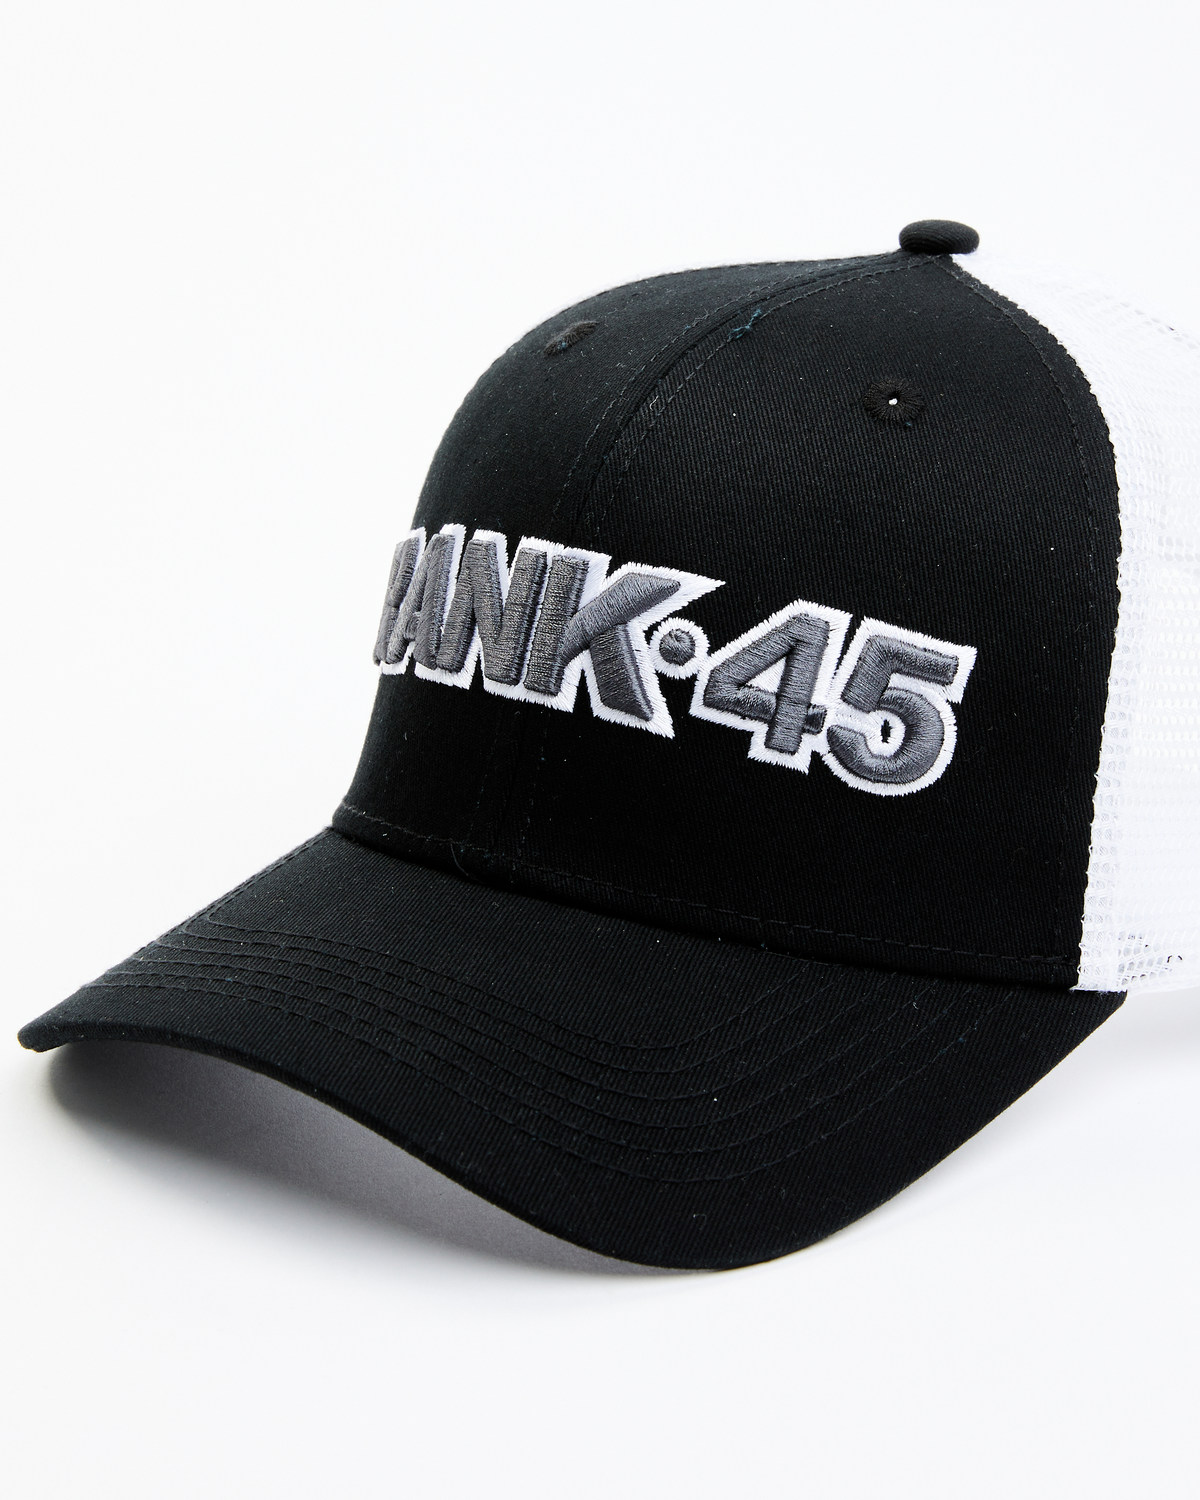 RANK 45® Men's Embroidered Logo Mesh-Back Ball Cap